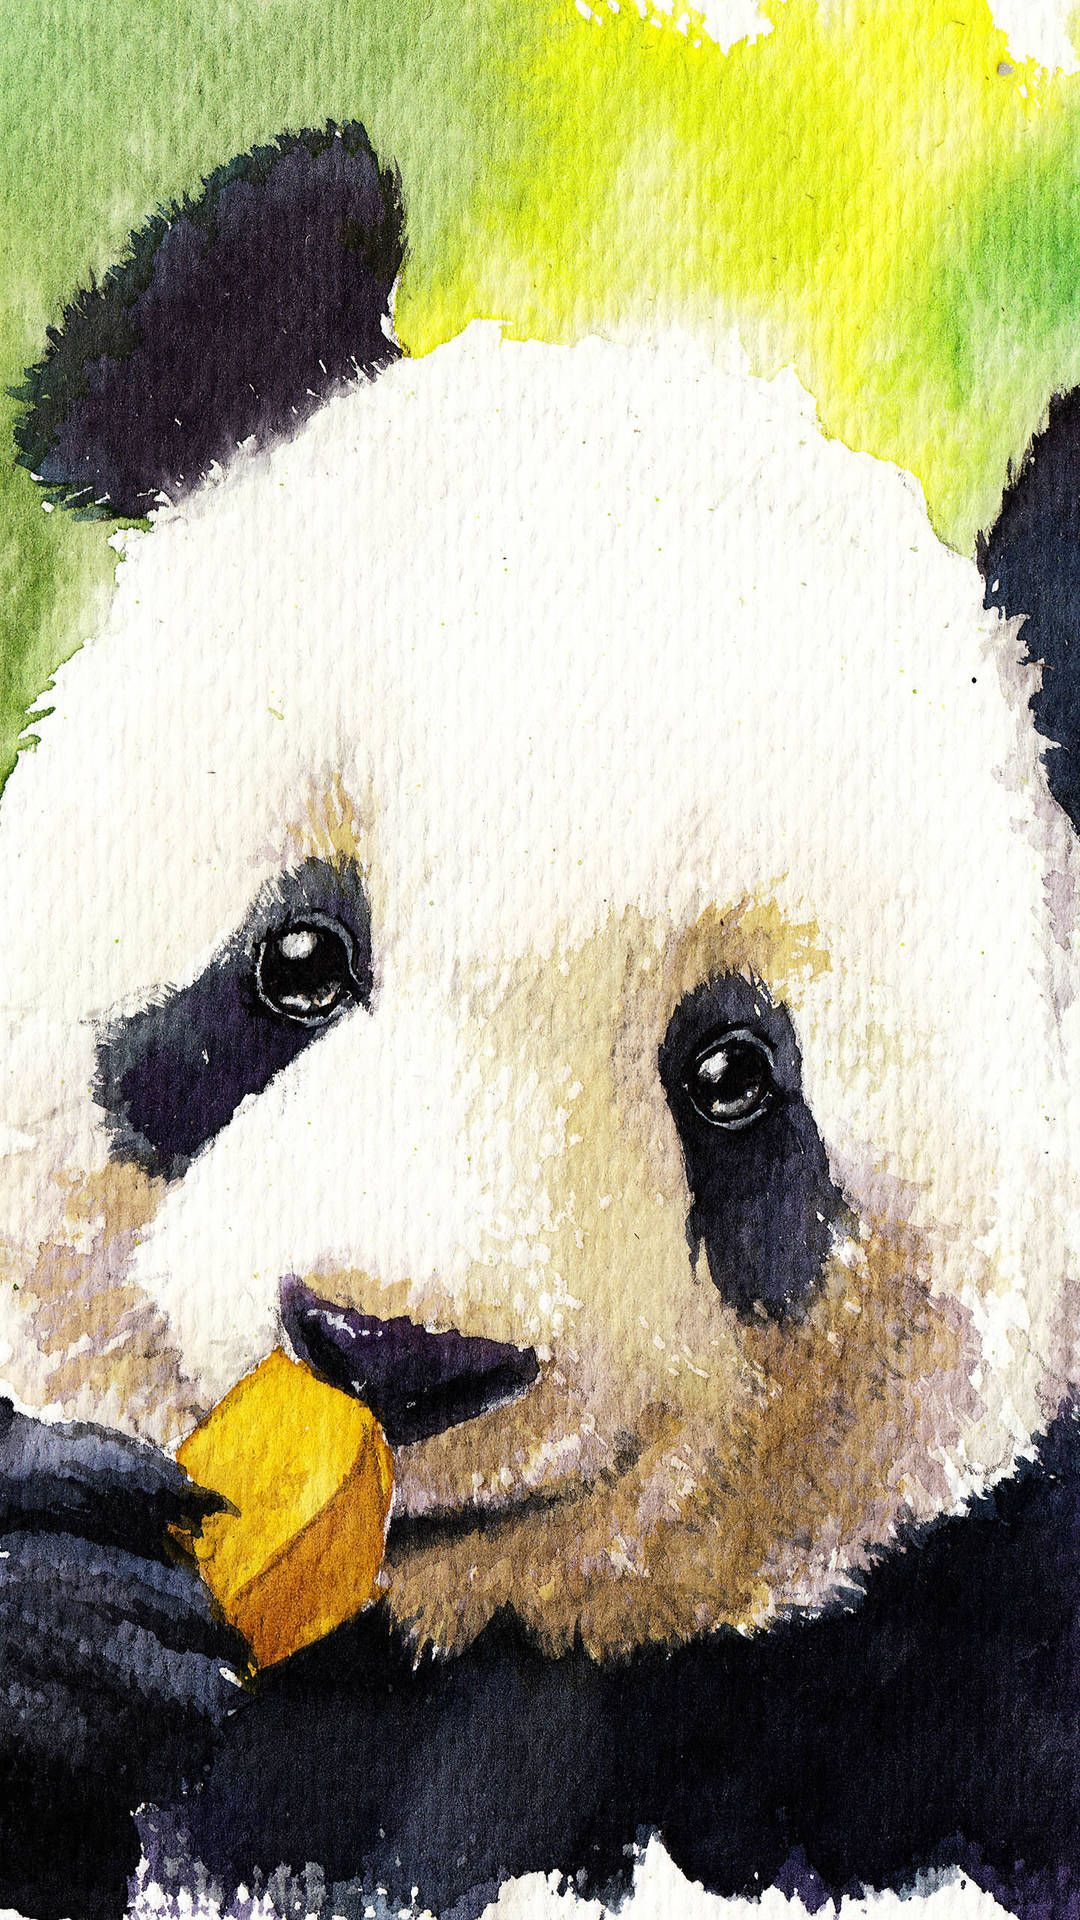 Cute Panda Iphone Hd Wallpapers - Wallpaper Cave